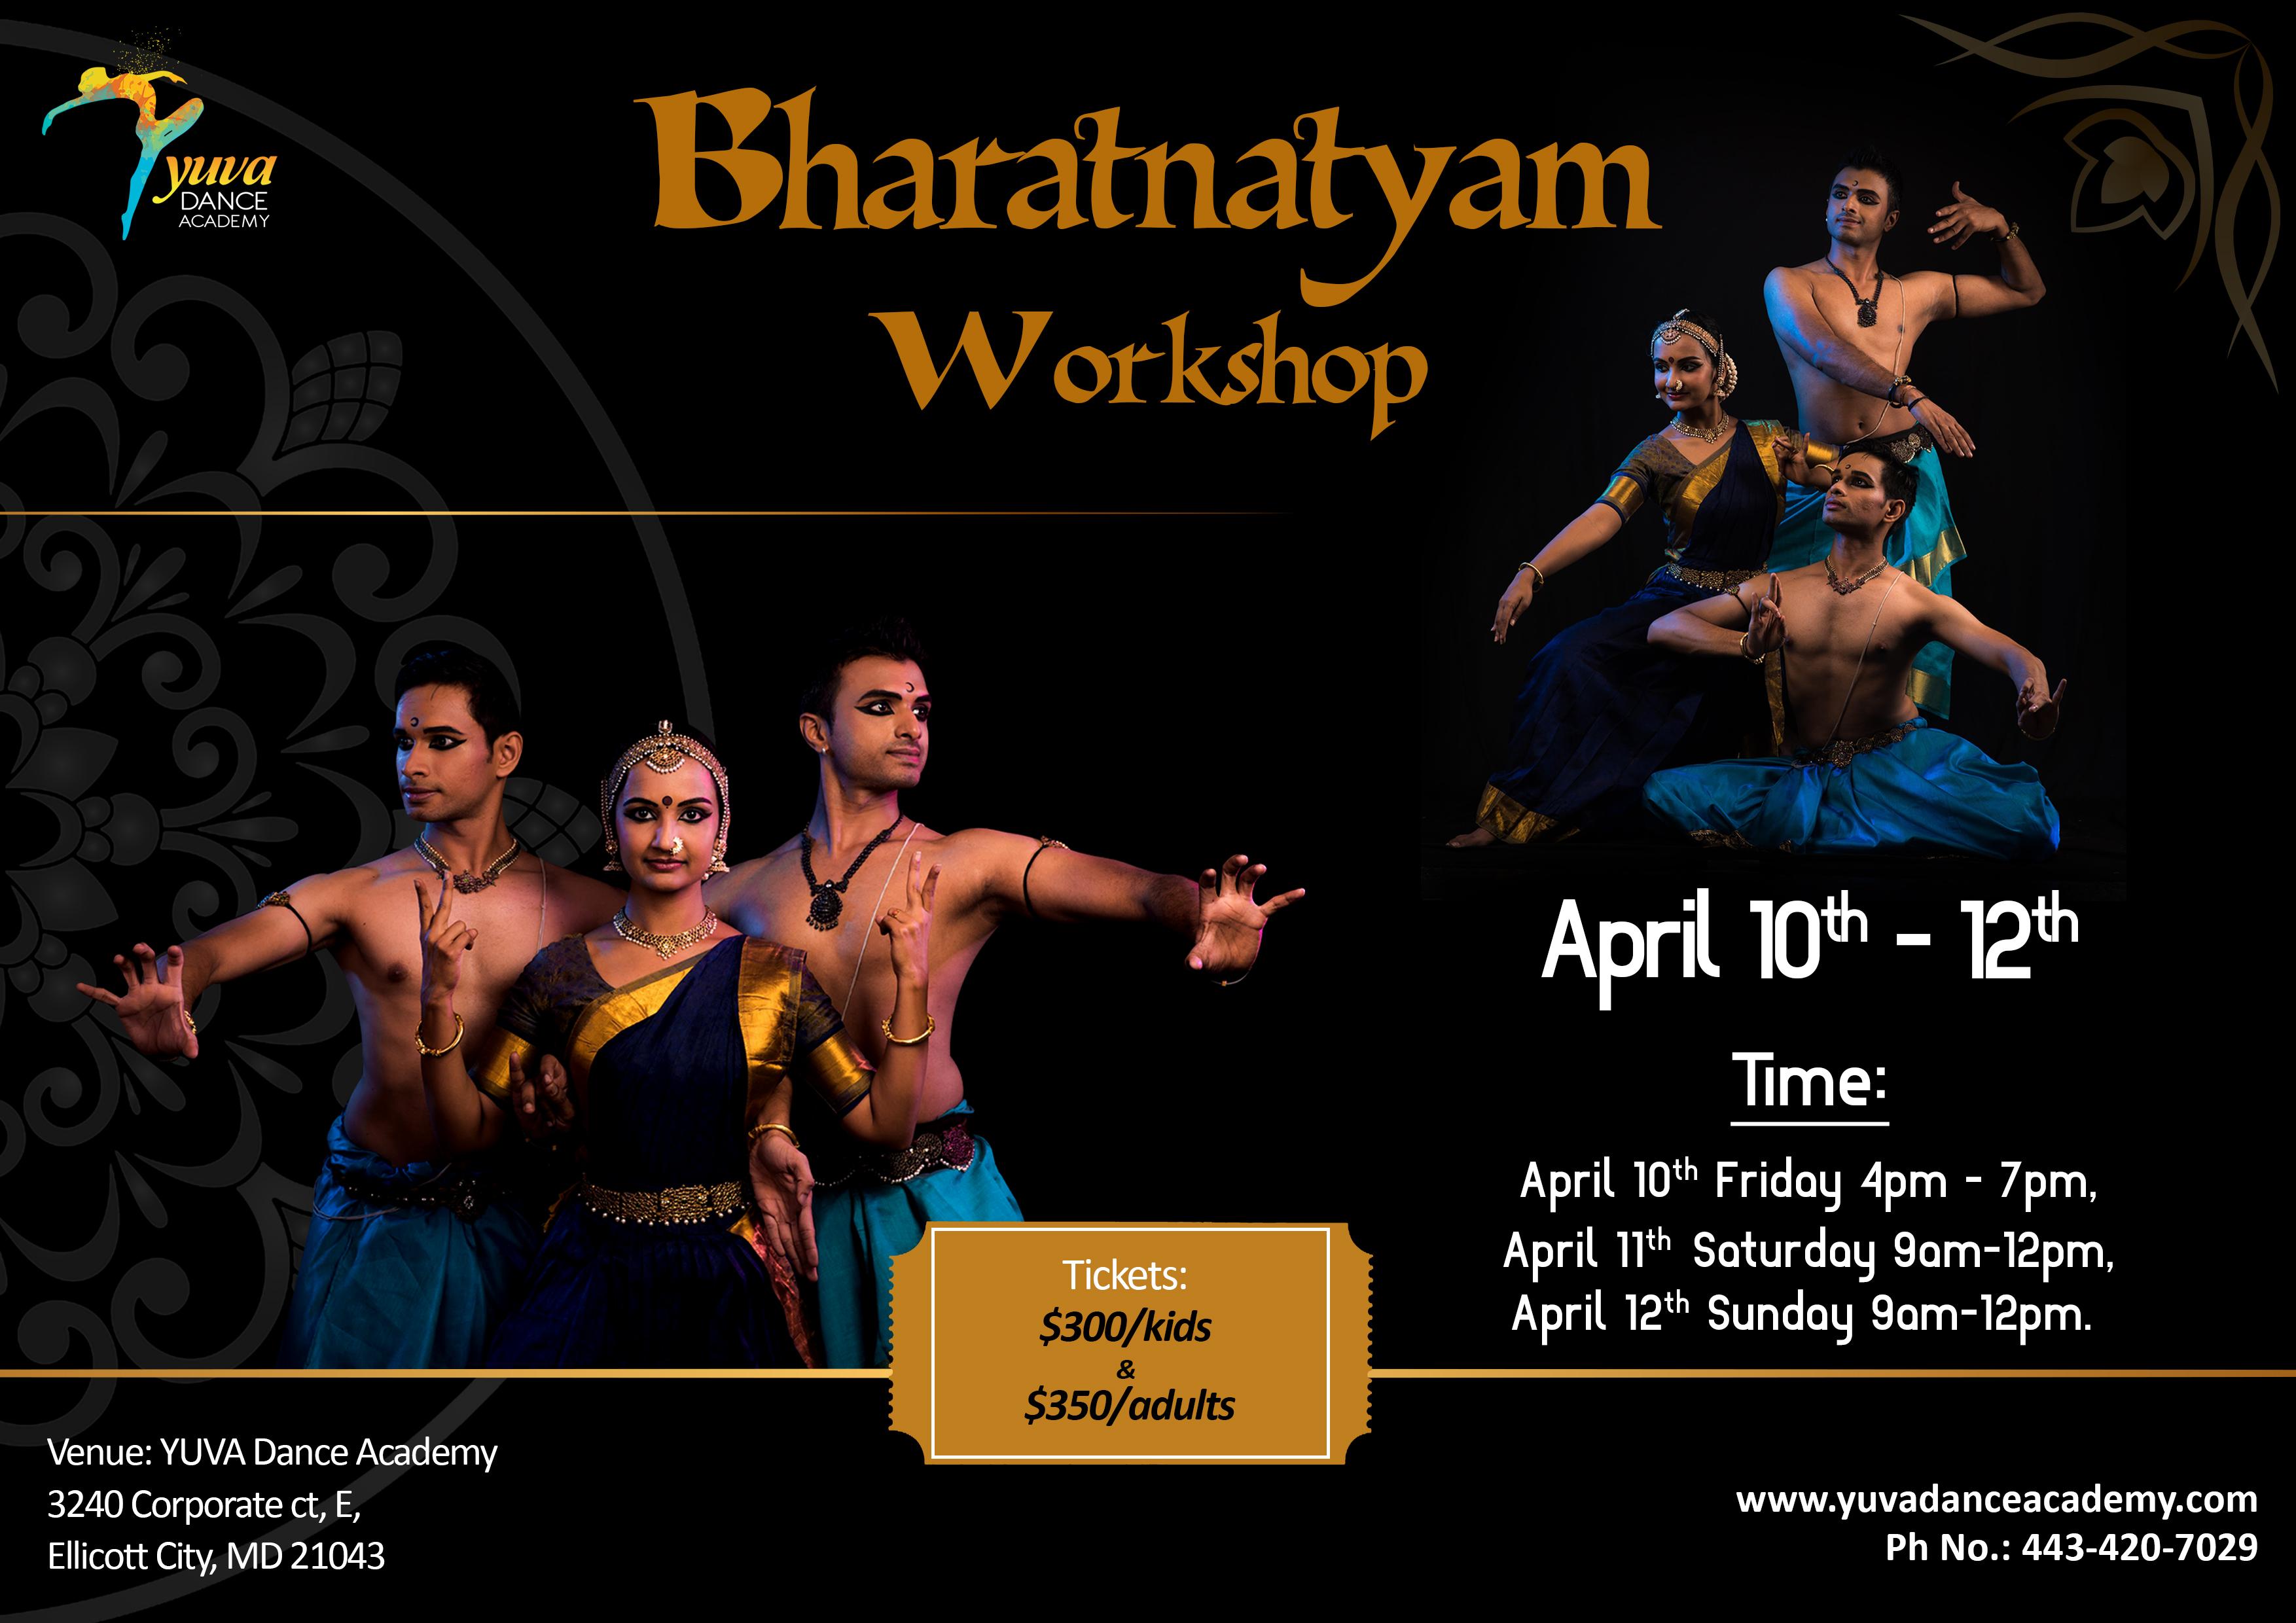 YUVA Bharatanatyam workshop by Parshwanath Upadhye US Tour 2020